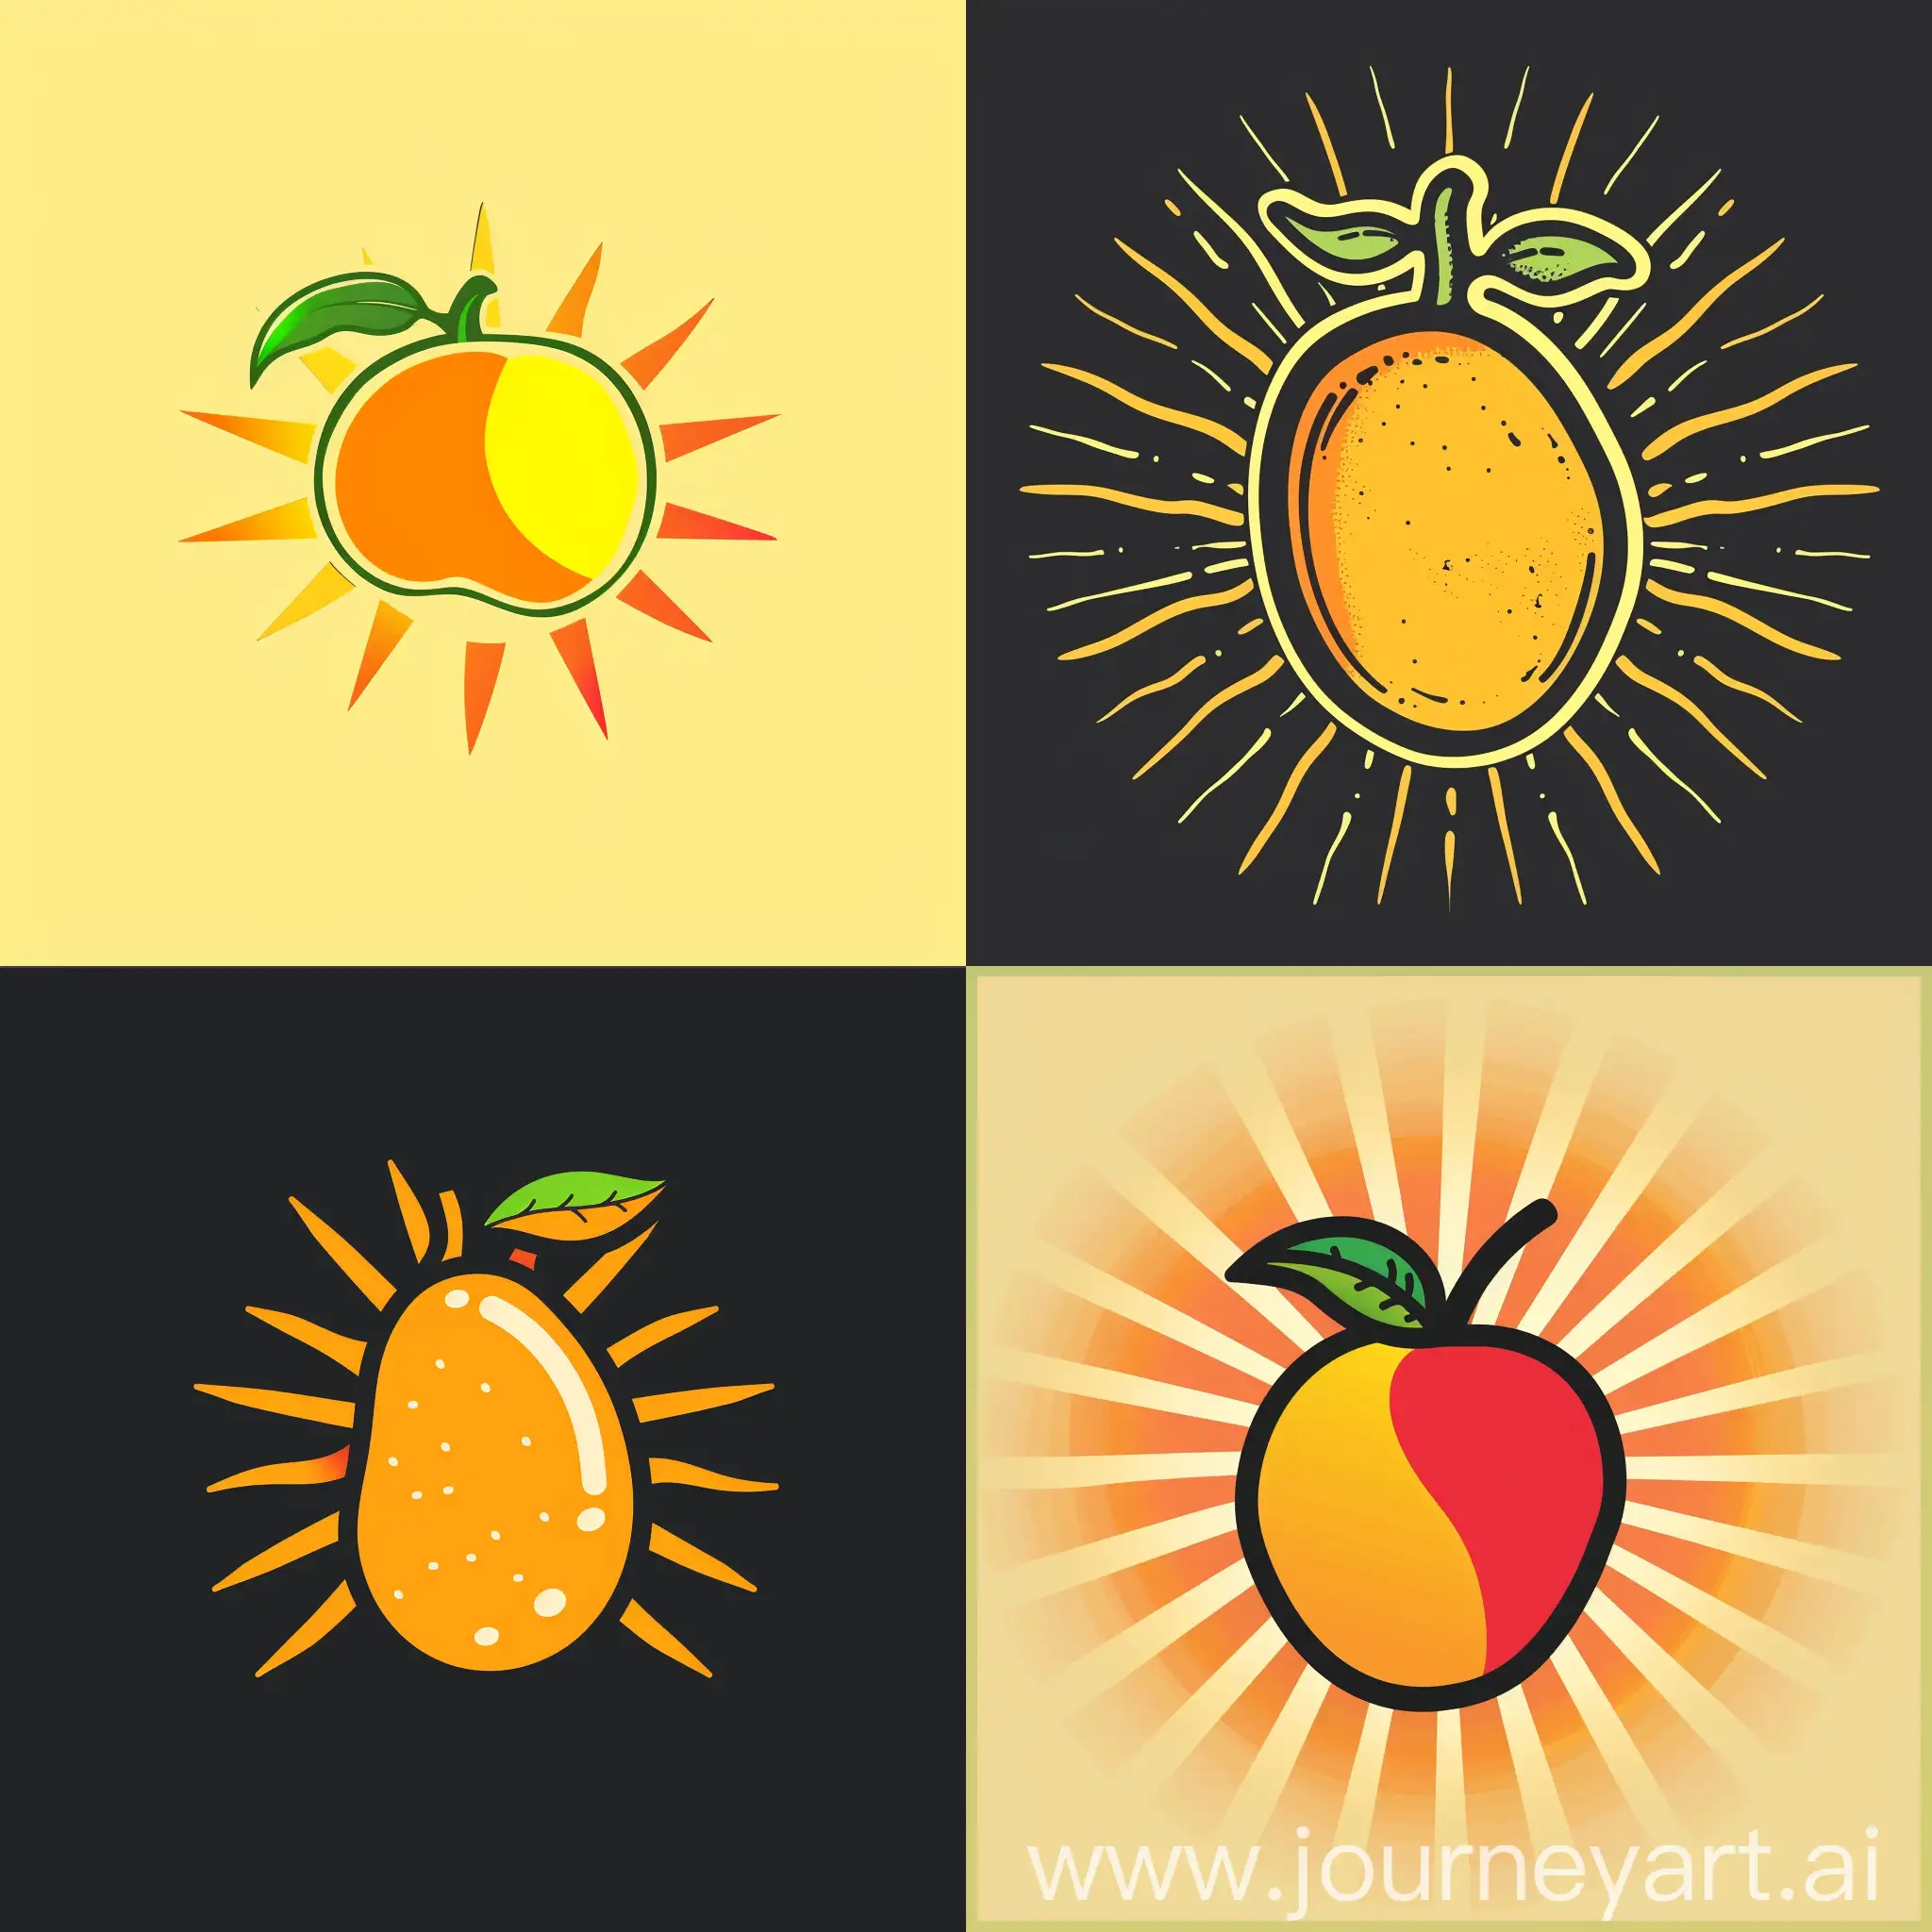 a simple logo of a mango emanating sun rays